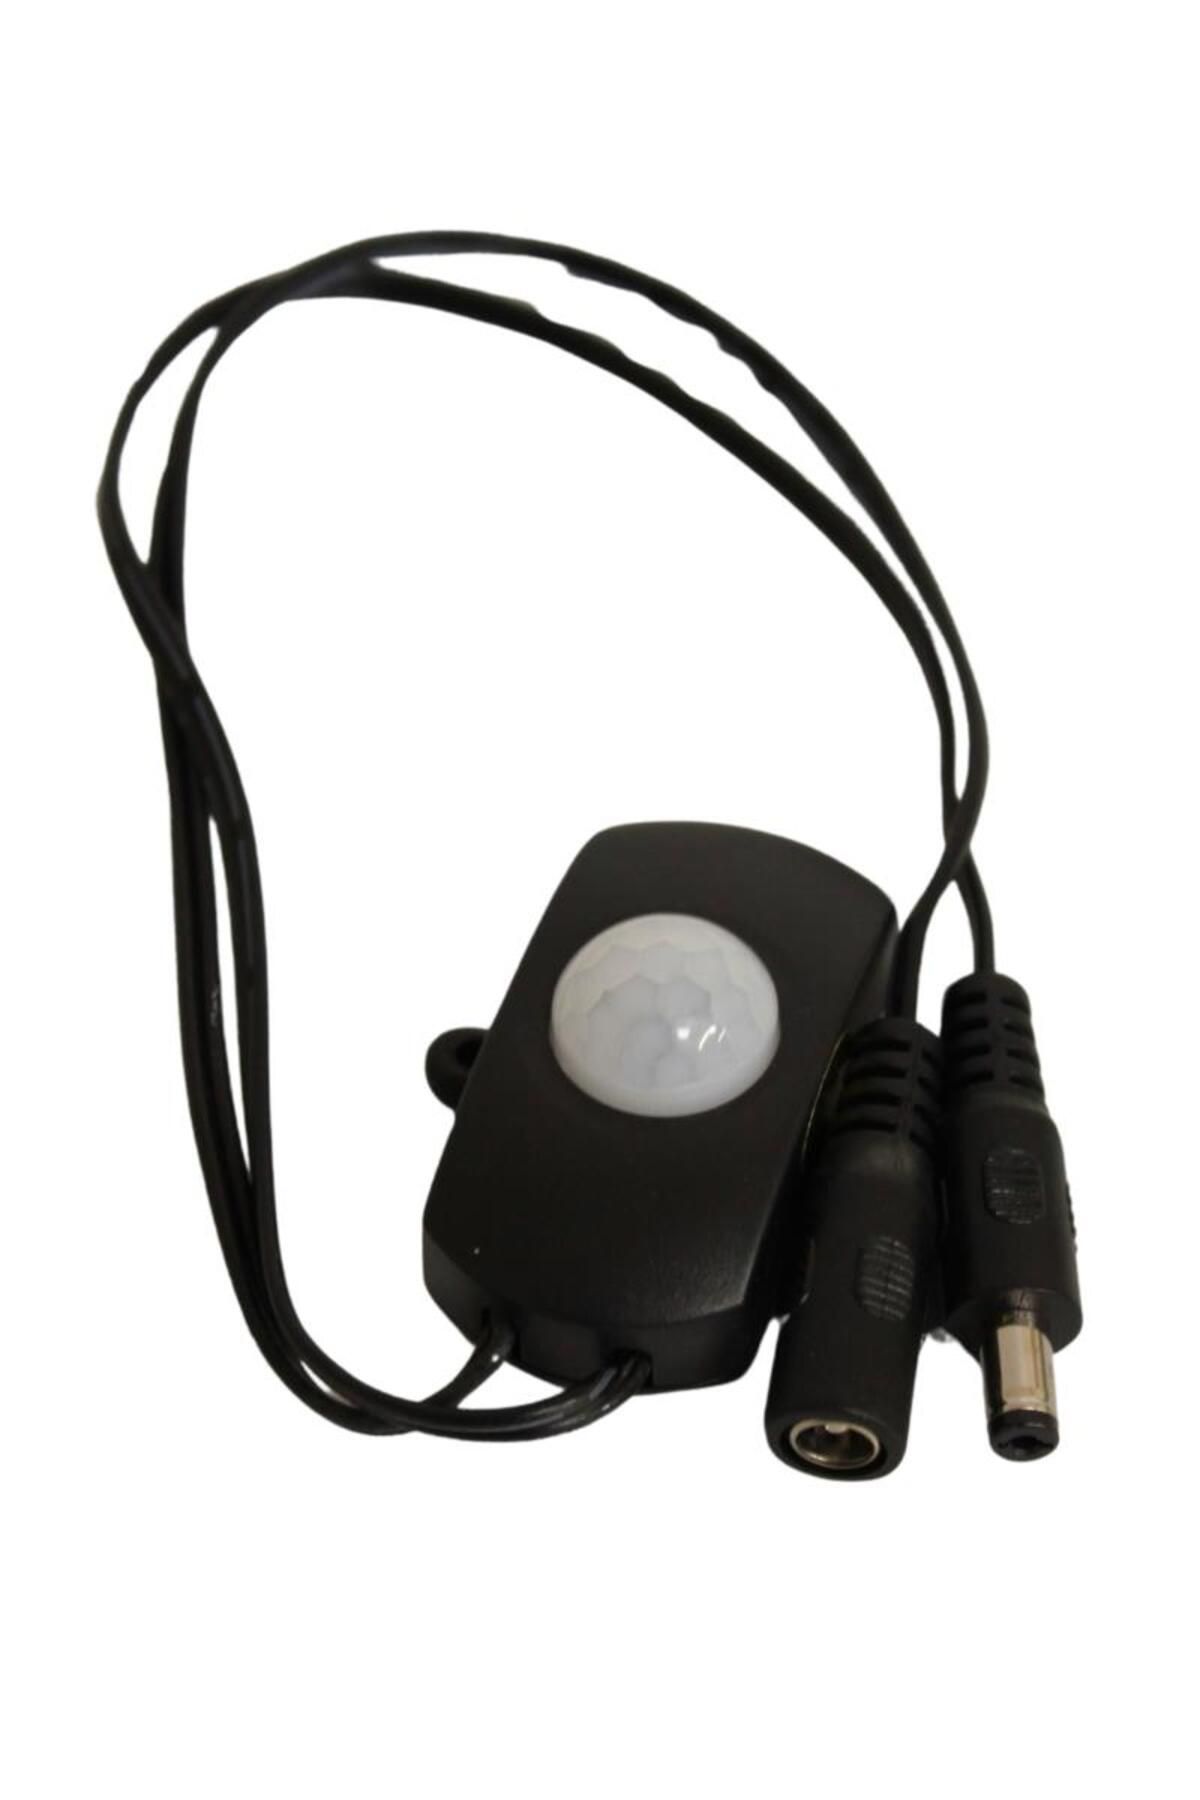 DORA LED 5-24v 4 Amper Pır Sensör Kızılötesi Hareket Sensörü Insan Hareket Sensör Dedektörü 1 Adet